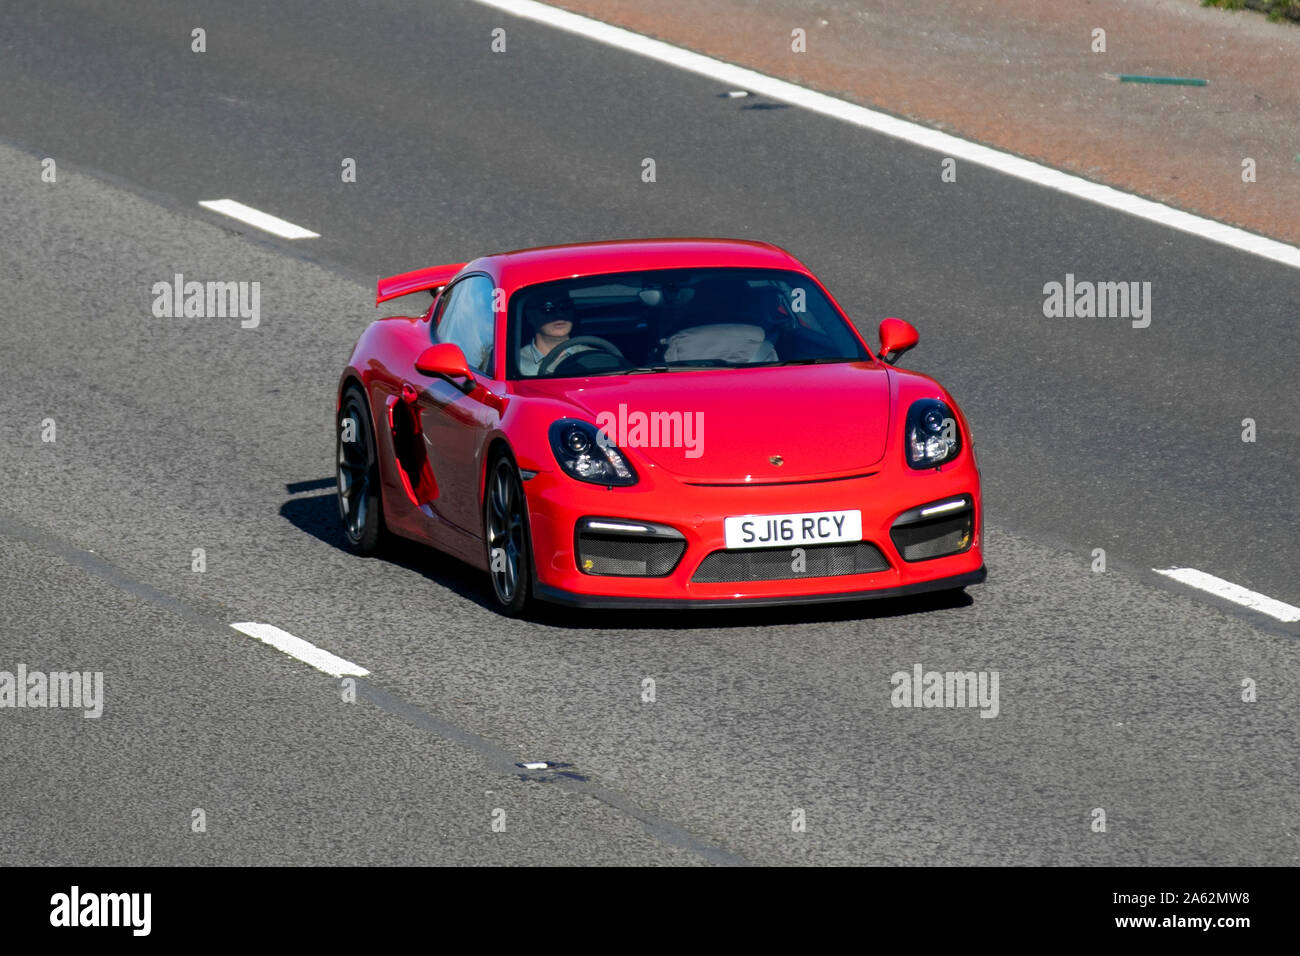 2016 red Porsche Cayman GT4; UK Vehicular traffic, transport, modern, saloon cars, south-bound on the 3 lane M6 motorway highway. UK Stock Photo